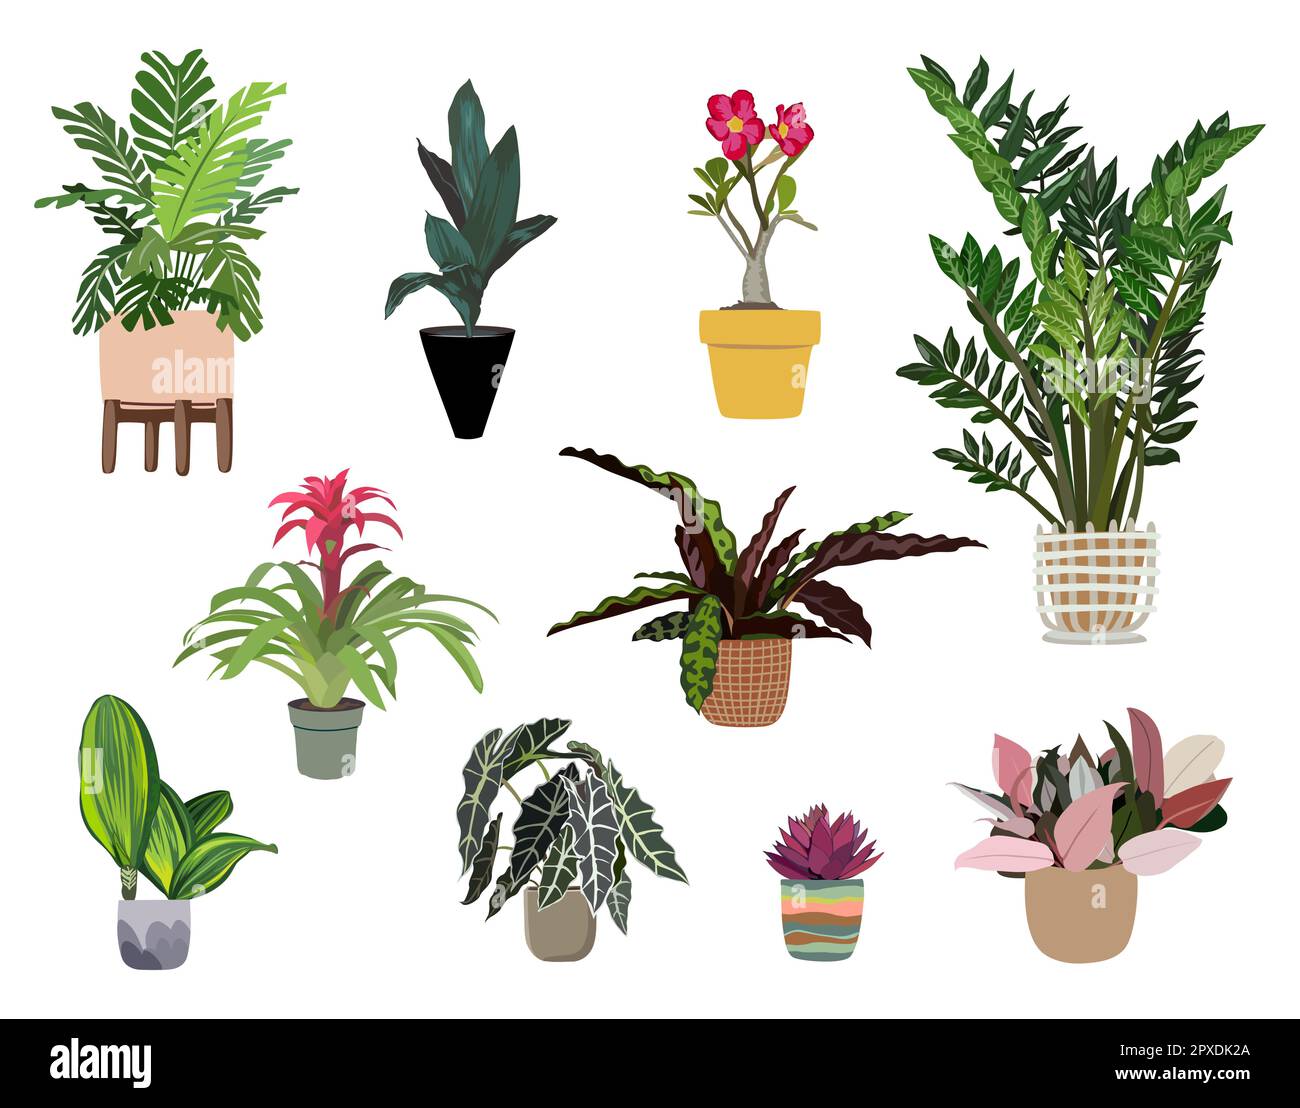 Indoor plants vector illustrations set on white. Stock Vector